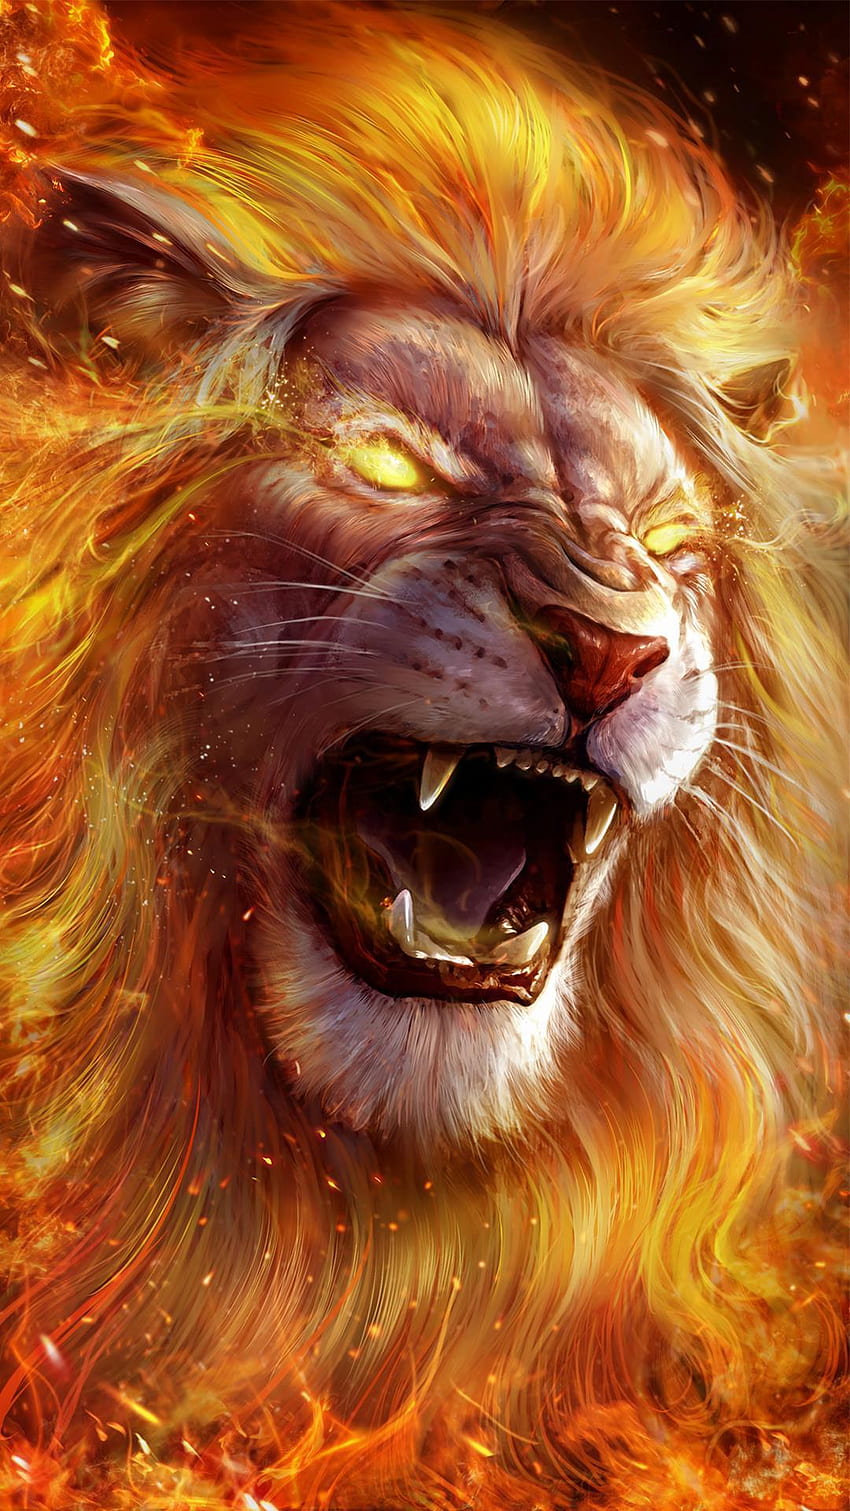 Roaring Lion Live untuk Android, Brave Lion wallpaper ponsel HD